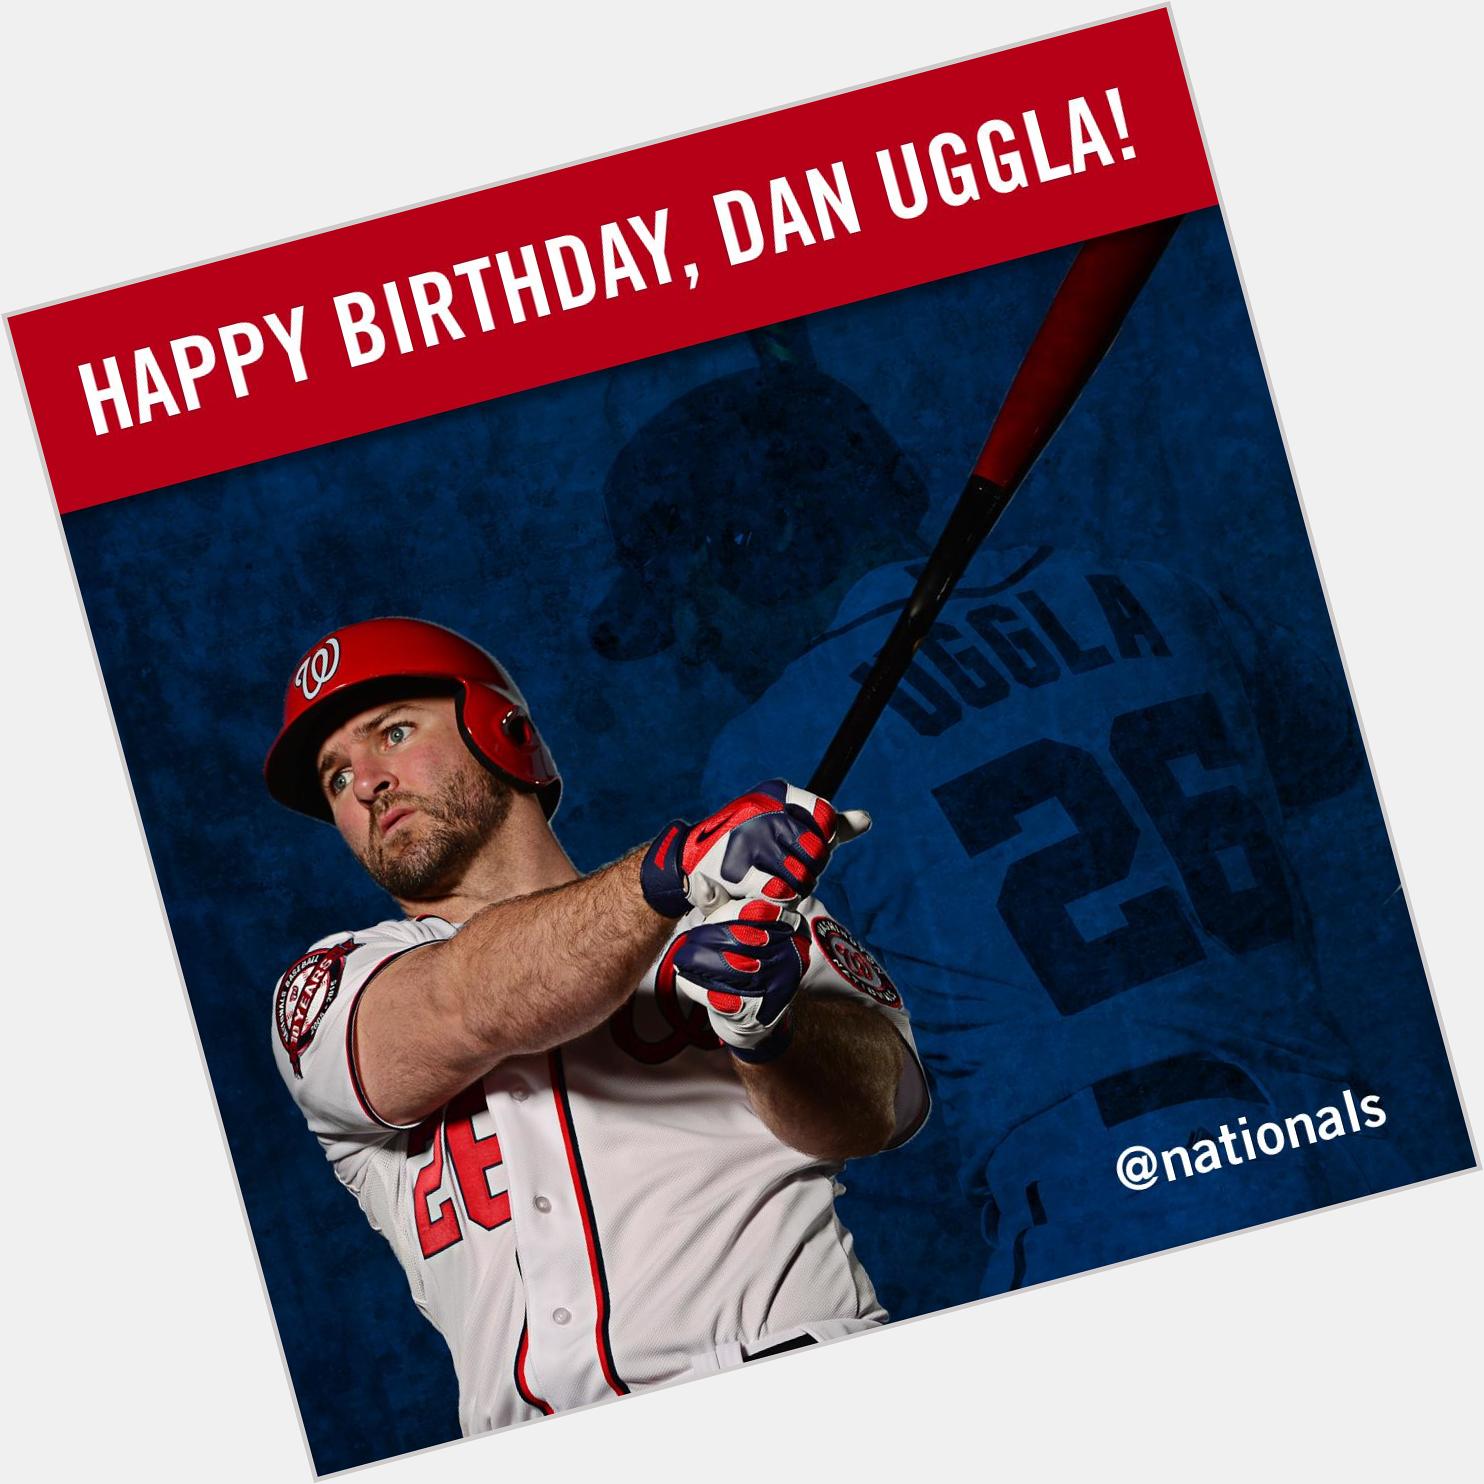 Wishing a very Happy Birthday to Mr. Dan Uggla! 